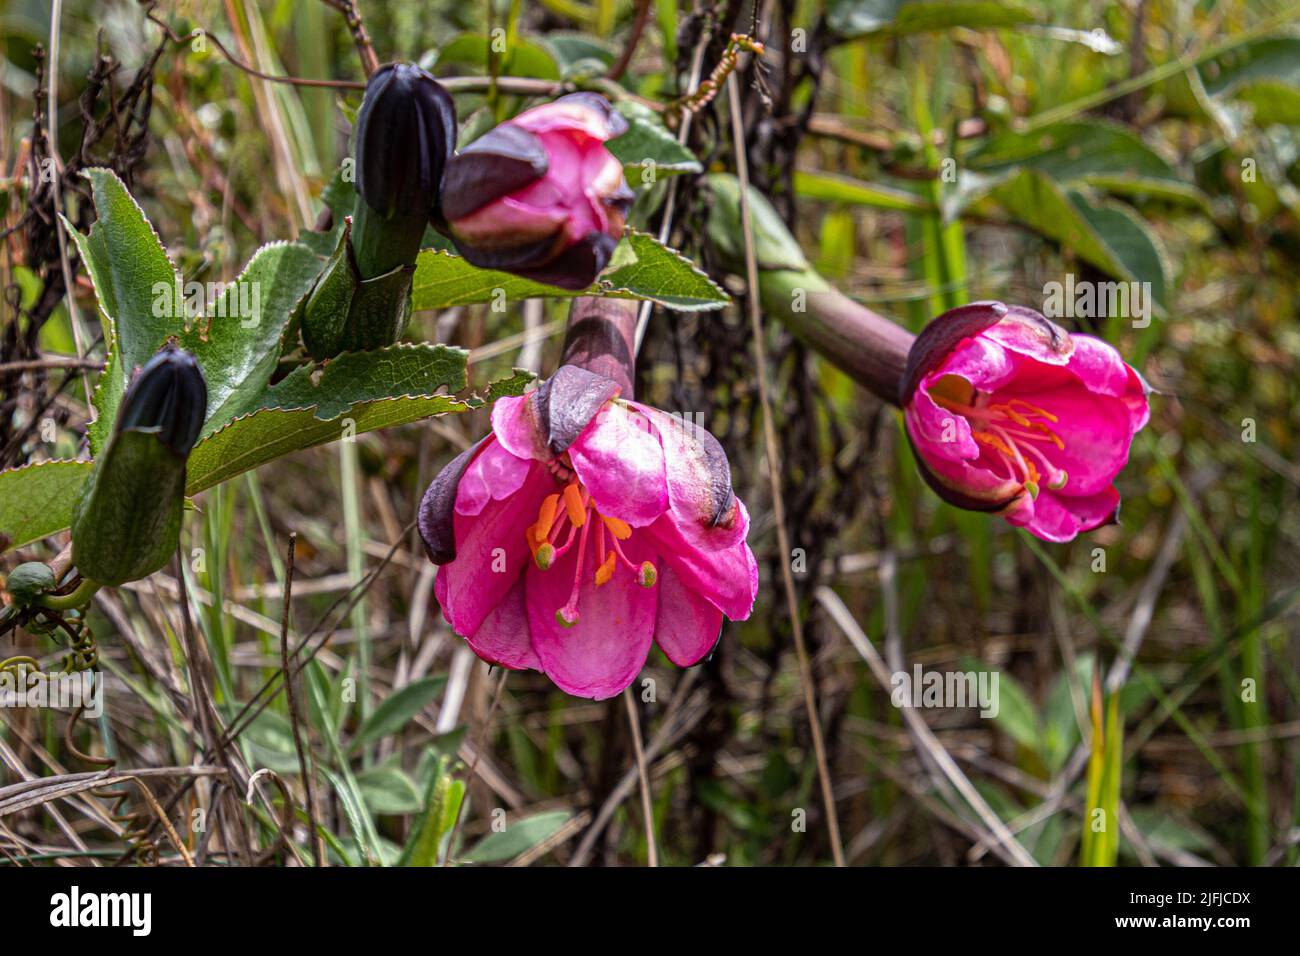 Taxo Silvestre (Tacso), Passiflora mixta. Found in wild nature in ecuadorian Andes, Azuay province Stock Photo